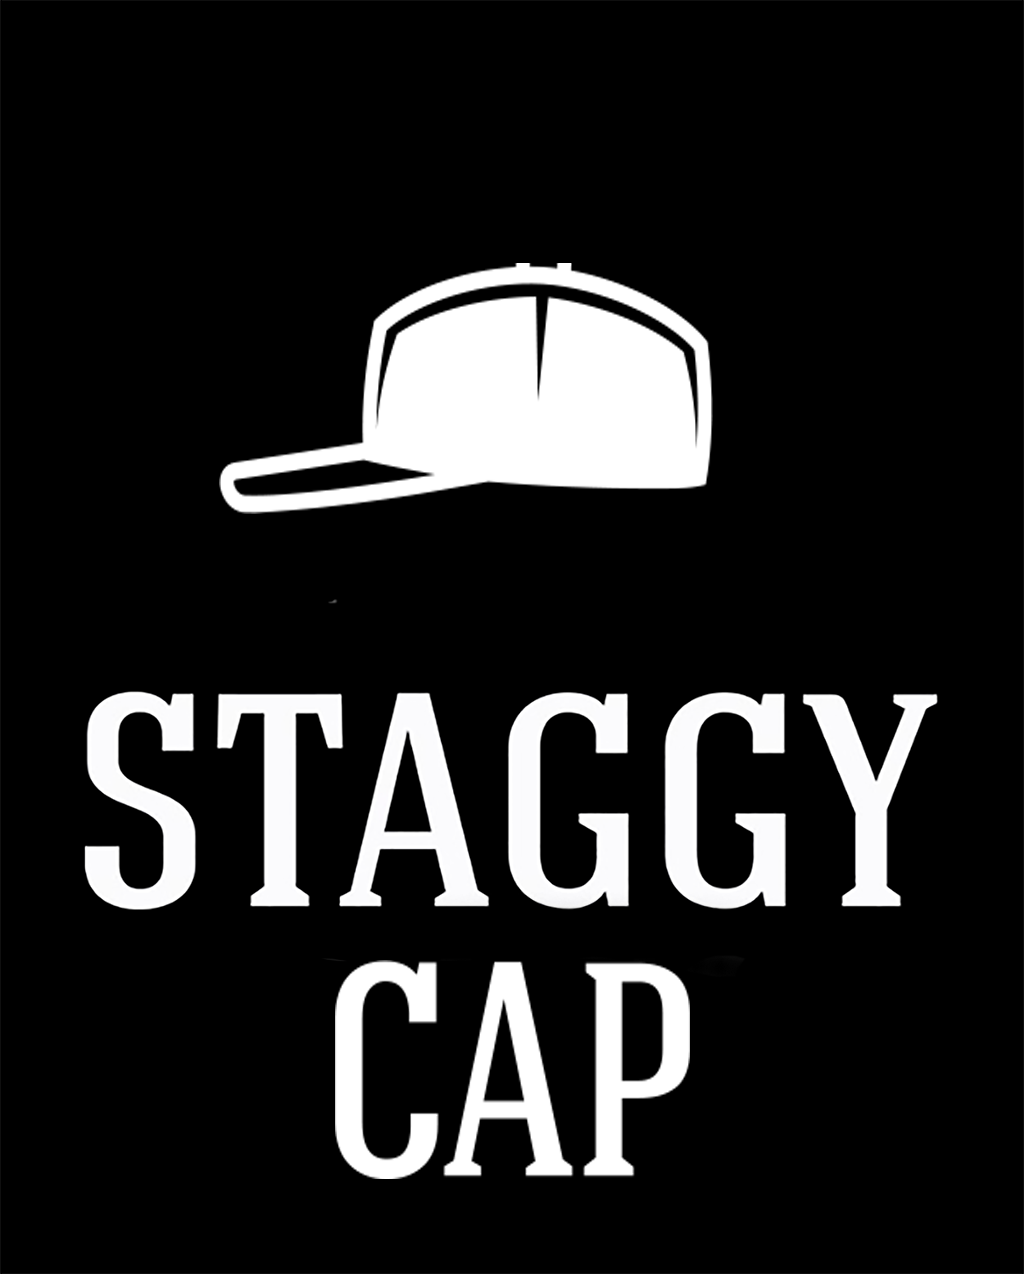 STAGGY CAP